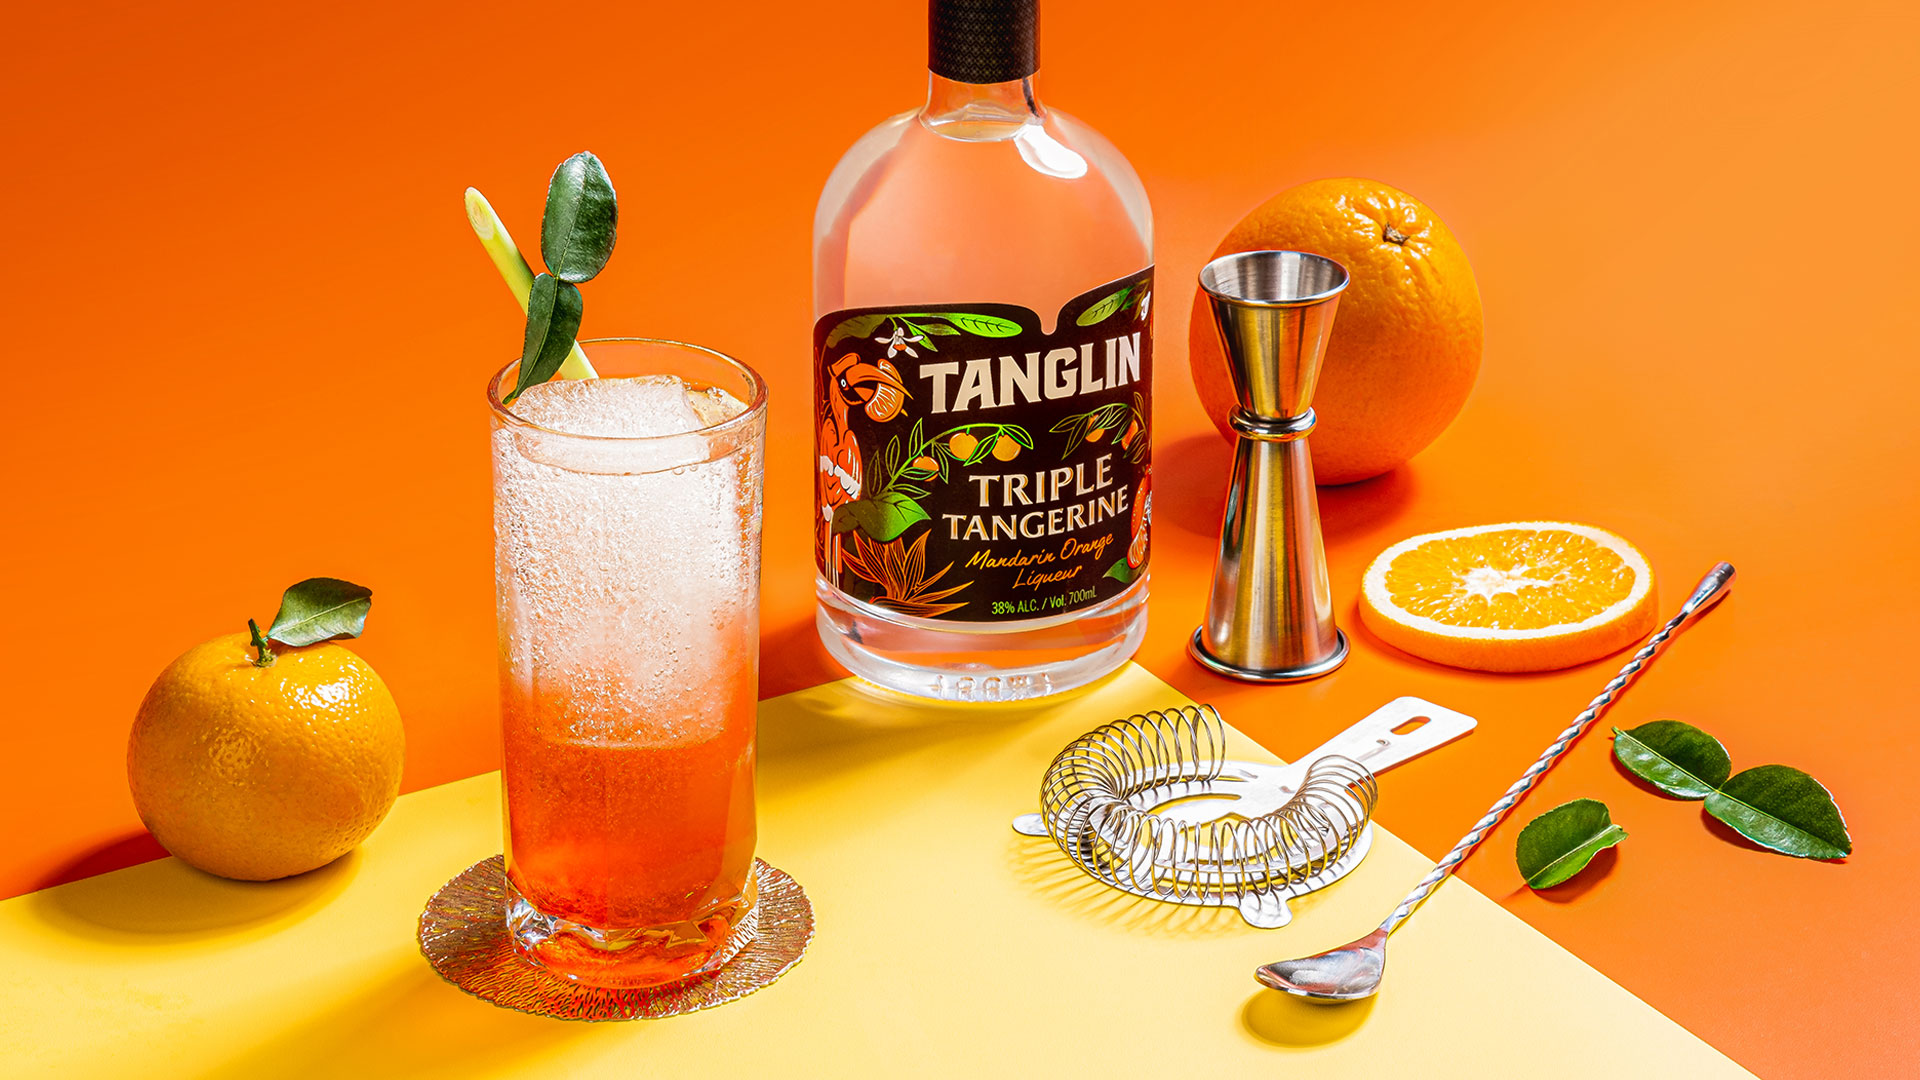 Tanglin Gin Triple Tangerine Packaging Design - World Brand Design Society